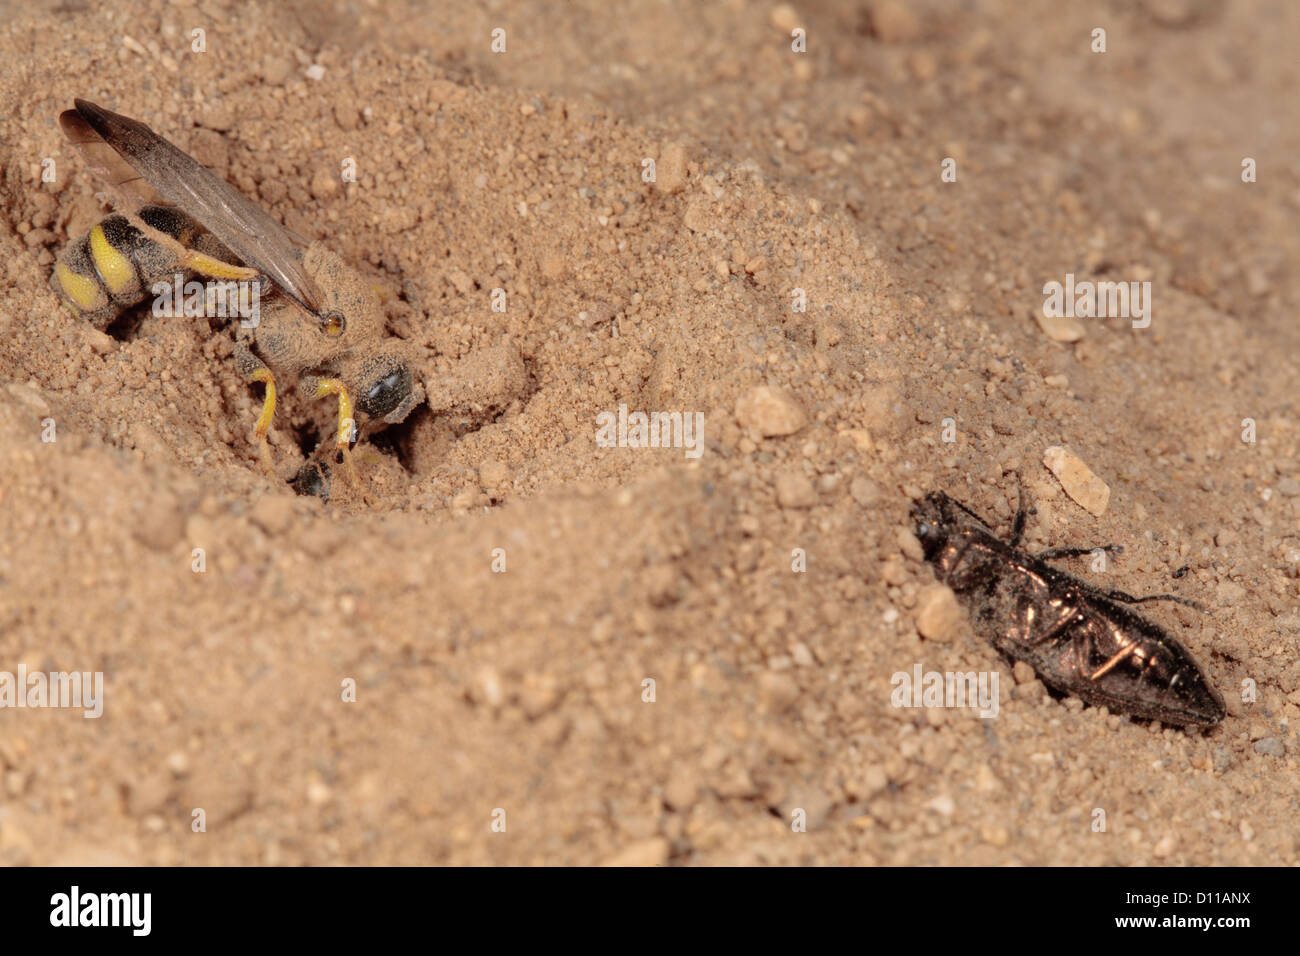 Solitary Wasp Cerceris bupresticida opening entrance to nest burrow, with Buprestid beetle prey. Stock Photo